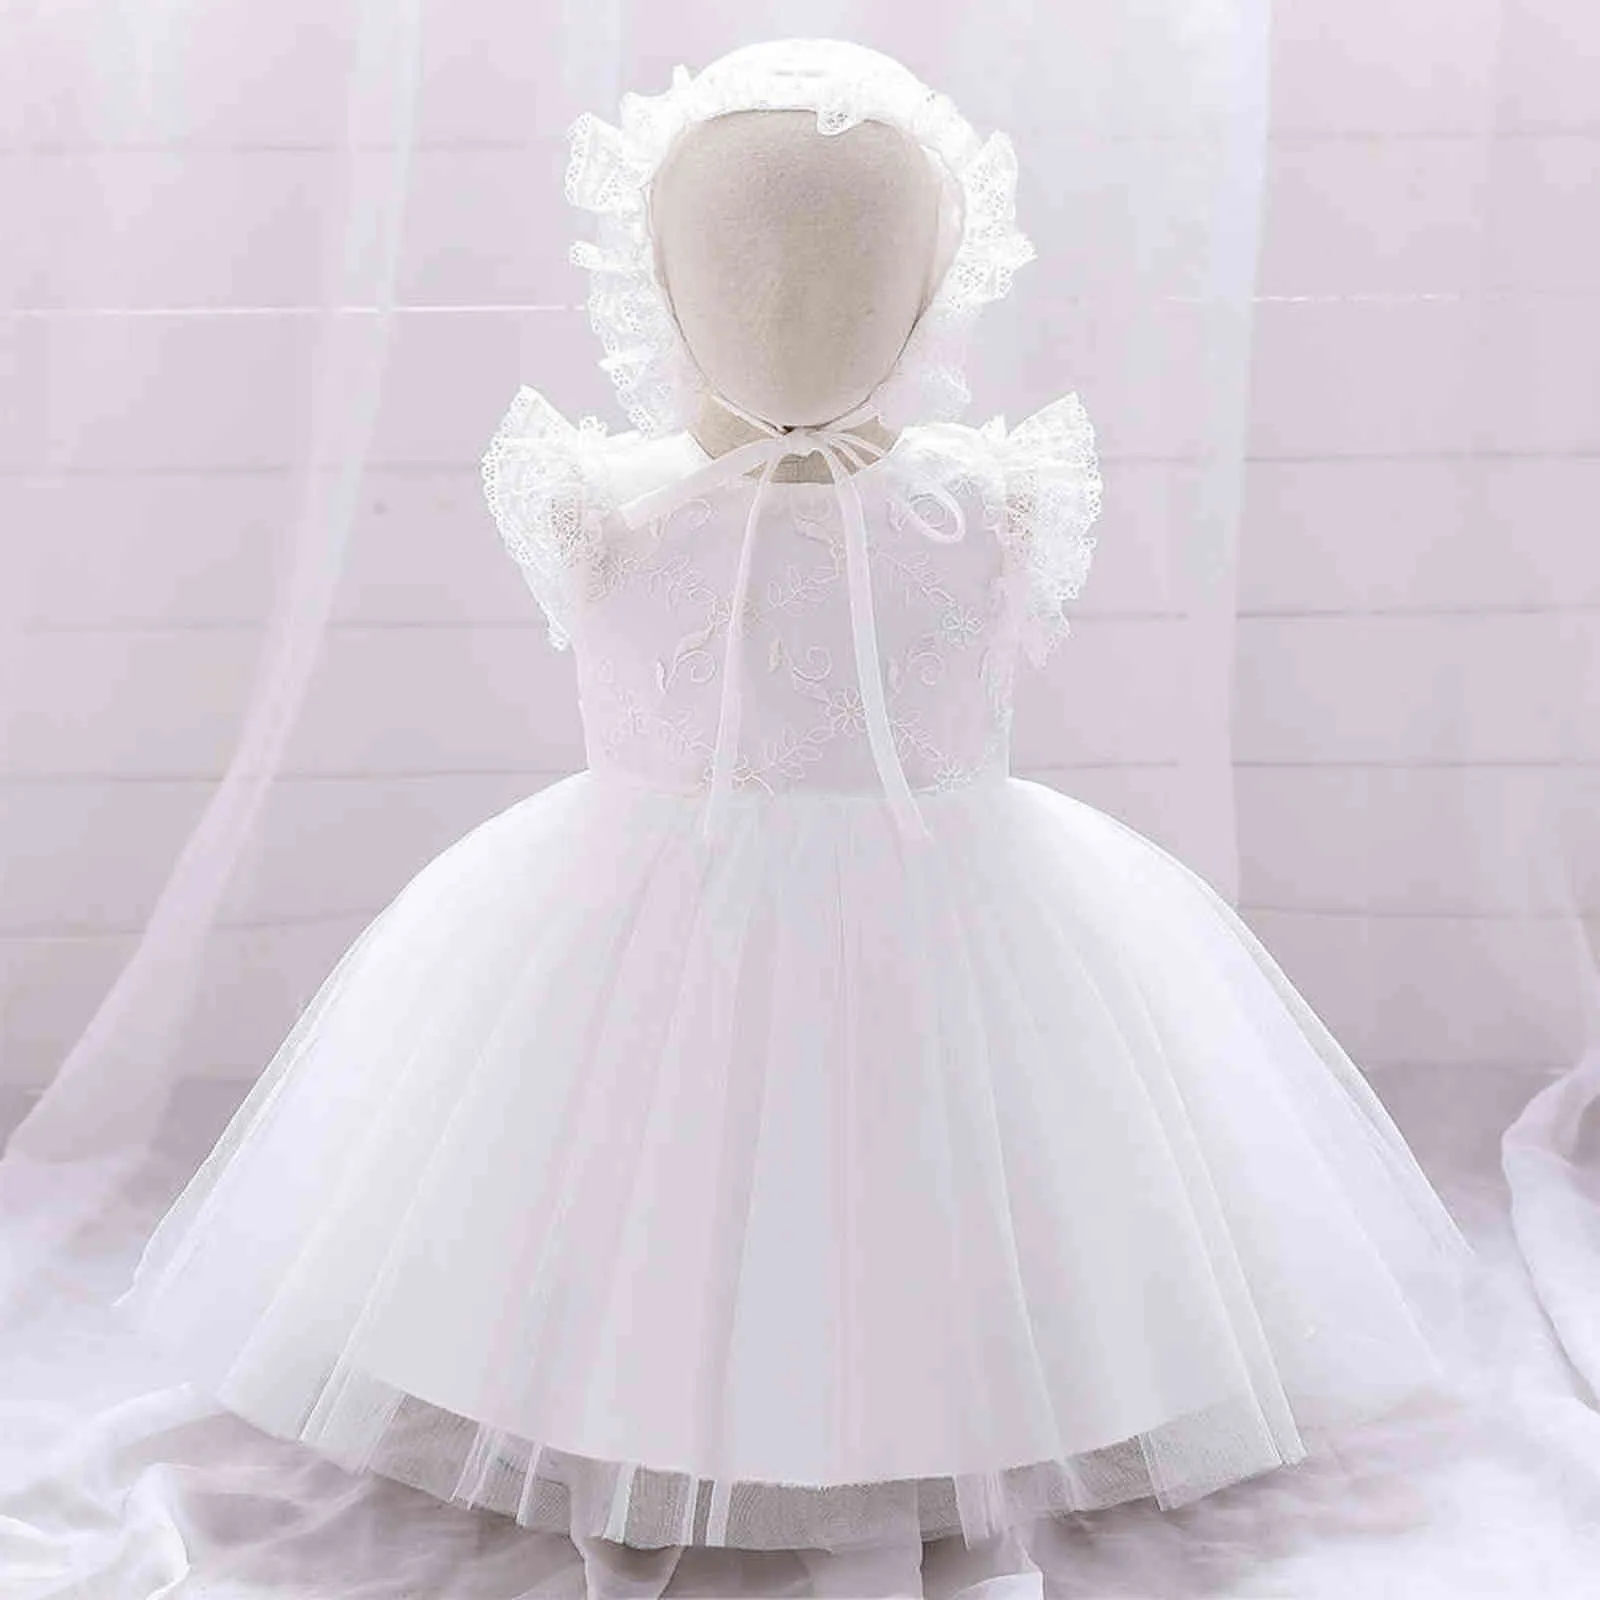 Baby Girl Dress Baptism Dresses For Girls 1st Year Birthday Party Wedding Baby Infant White Christening Princess Dress G1129